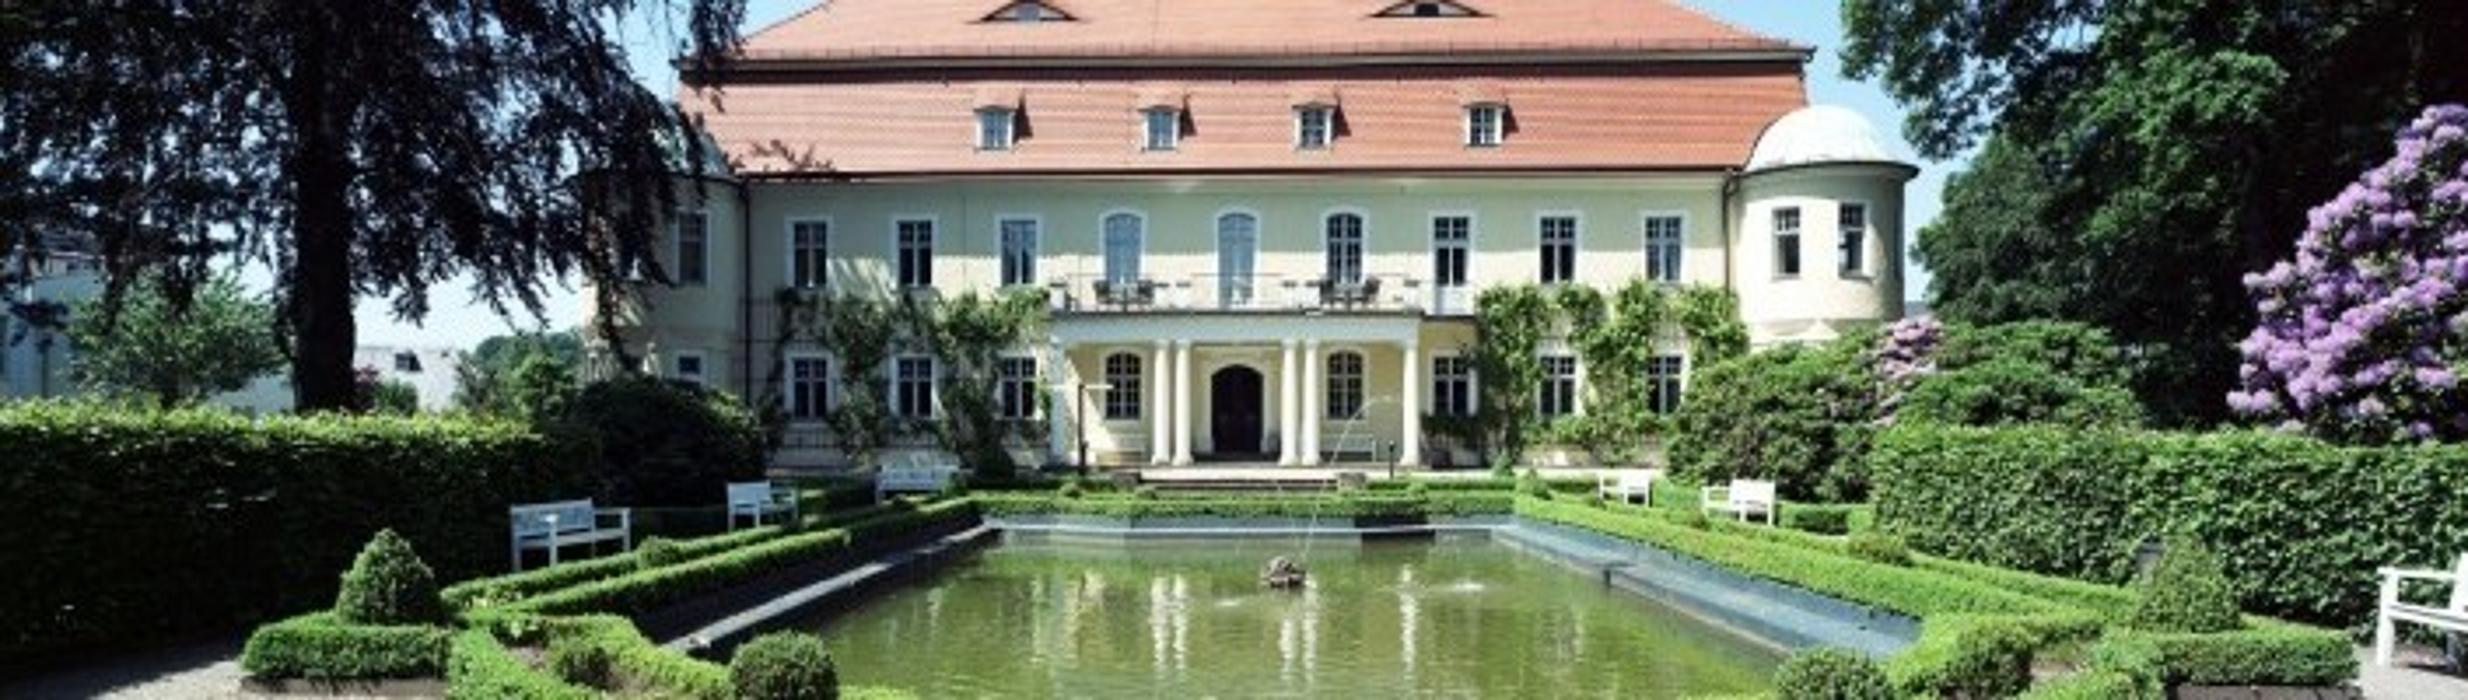 Bilder Hotel Schloss Schweinsburg